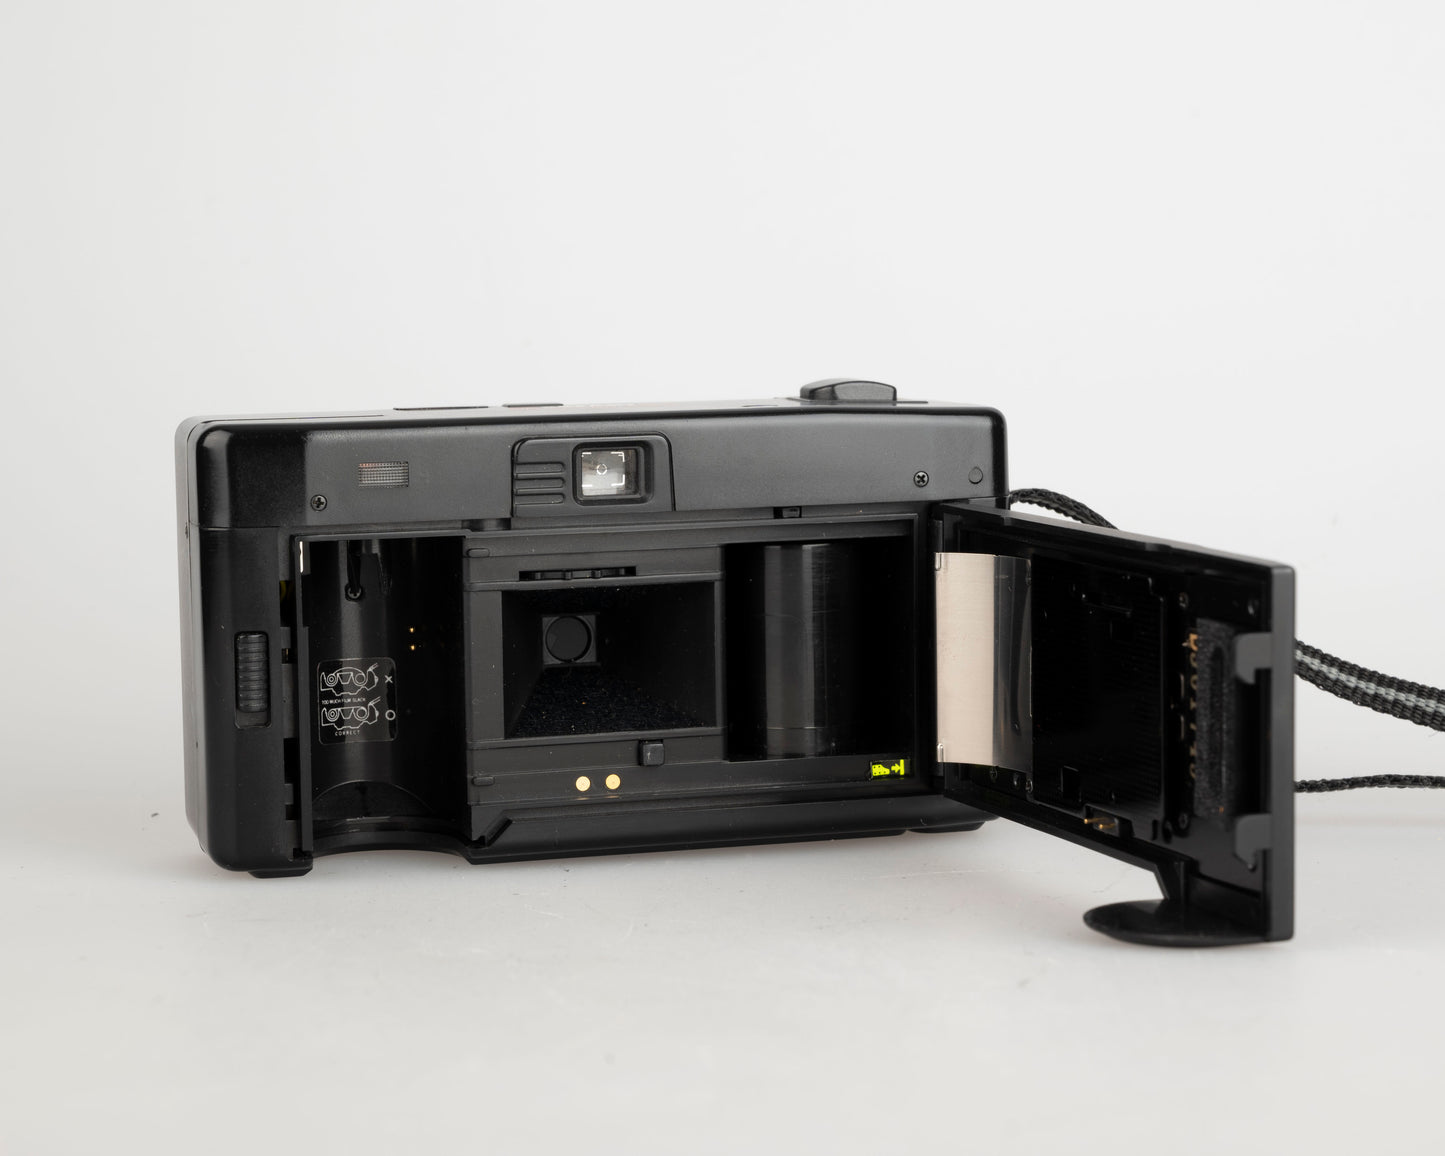 Safari Autoshot 35mm camera (serial D301749)